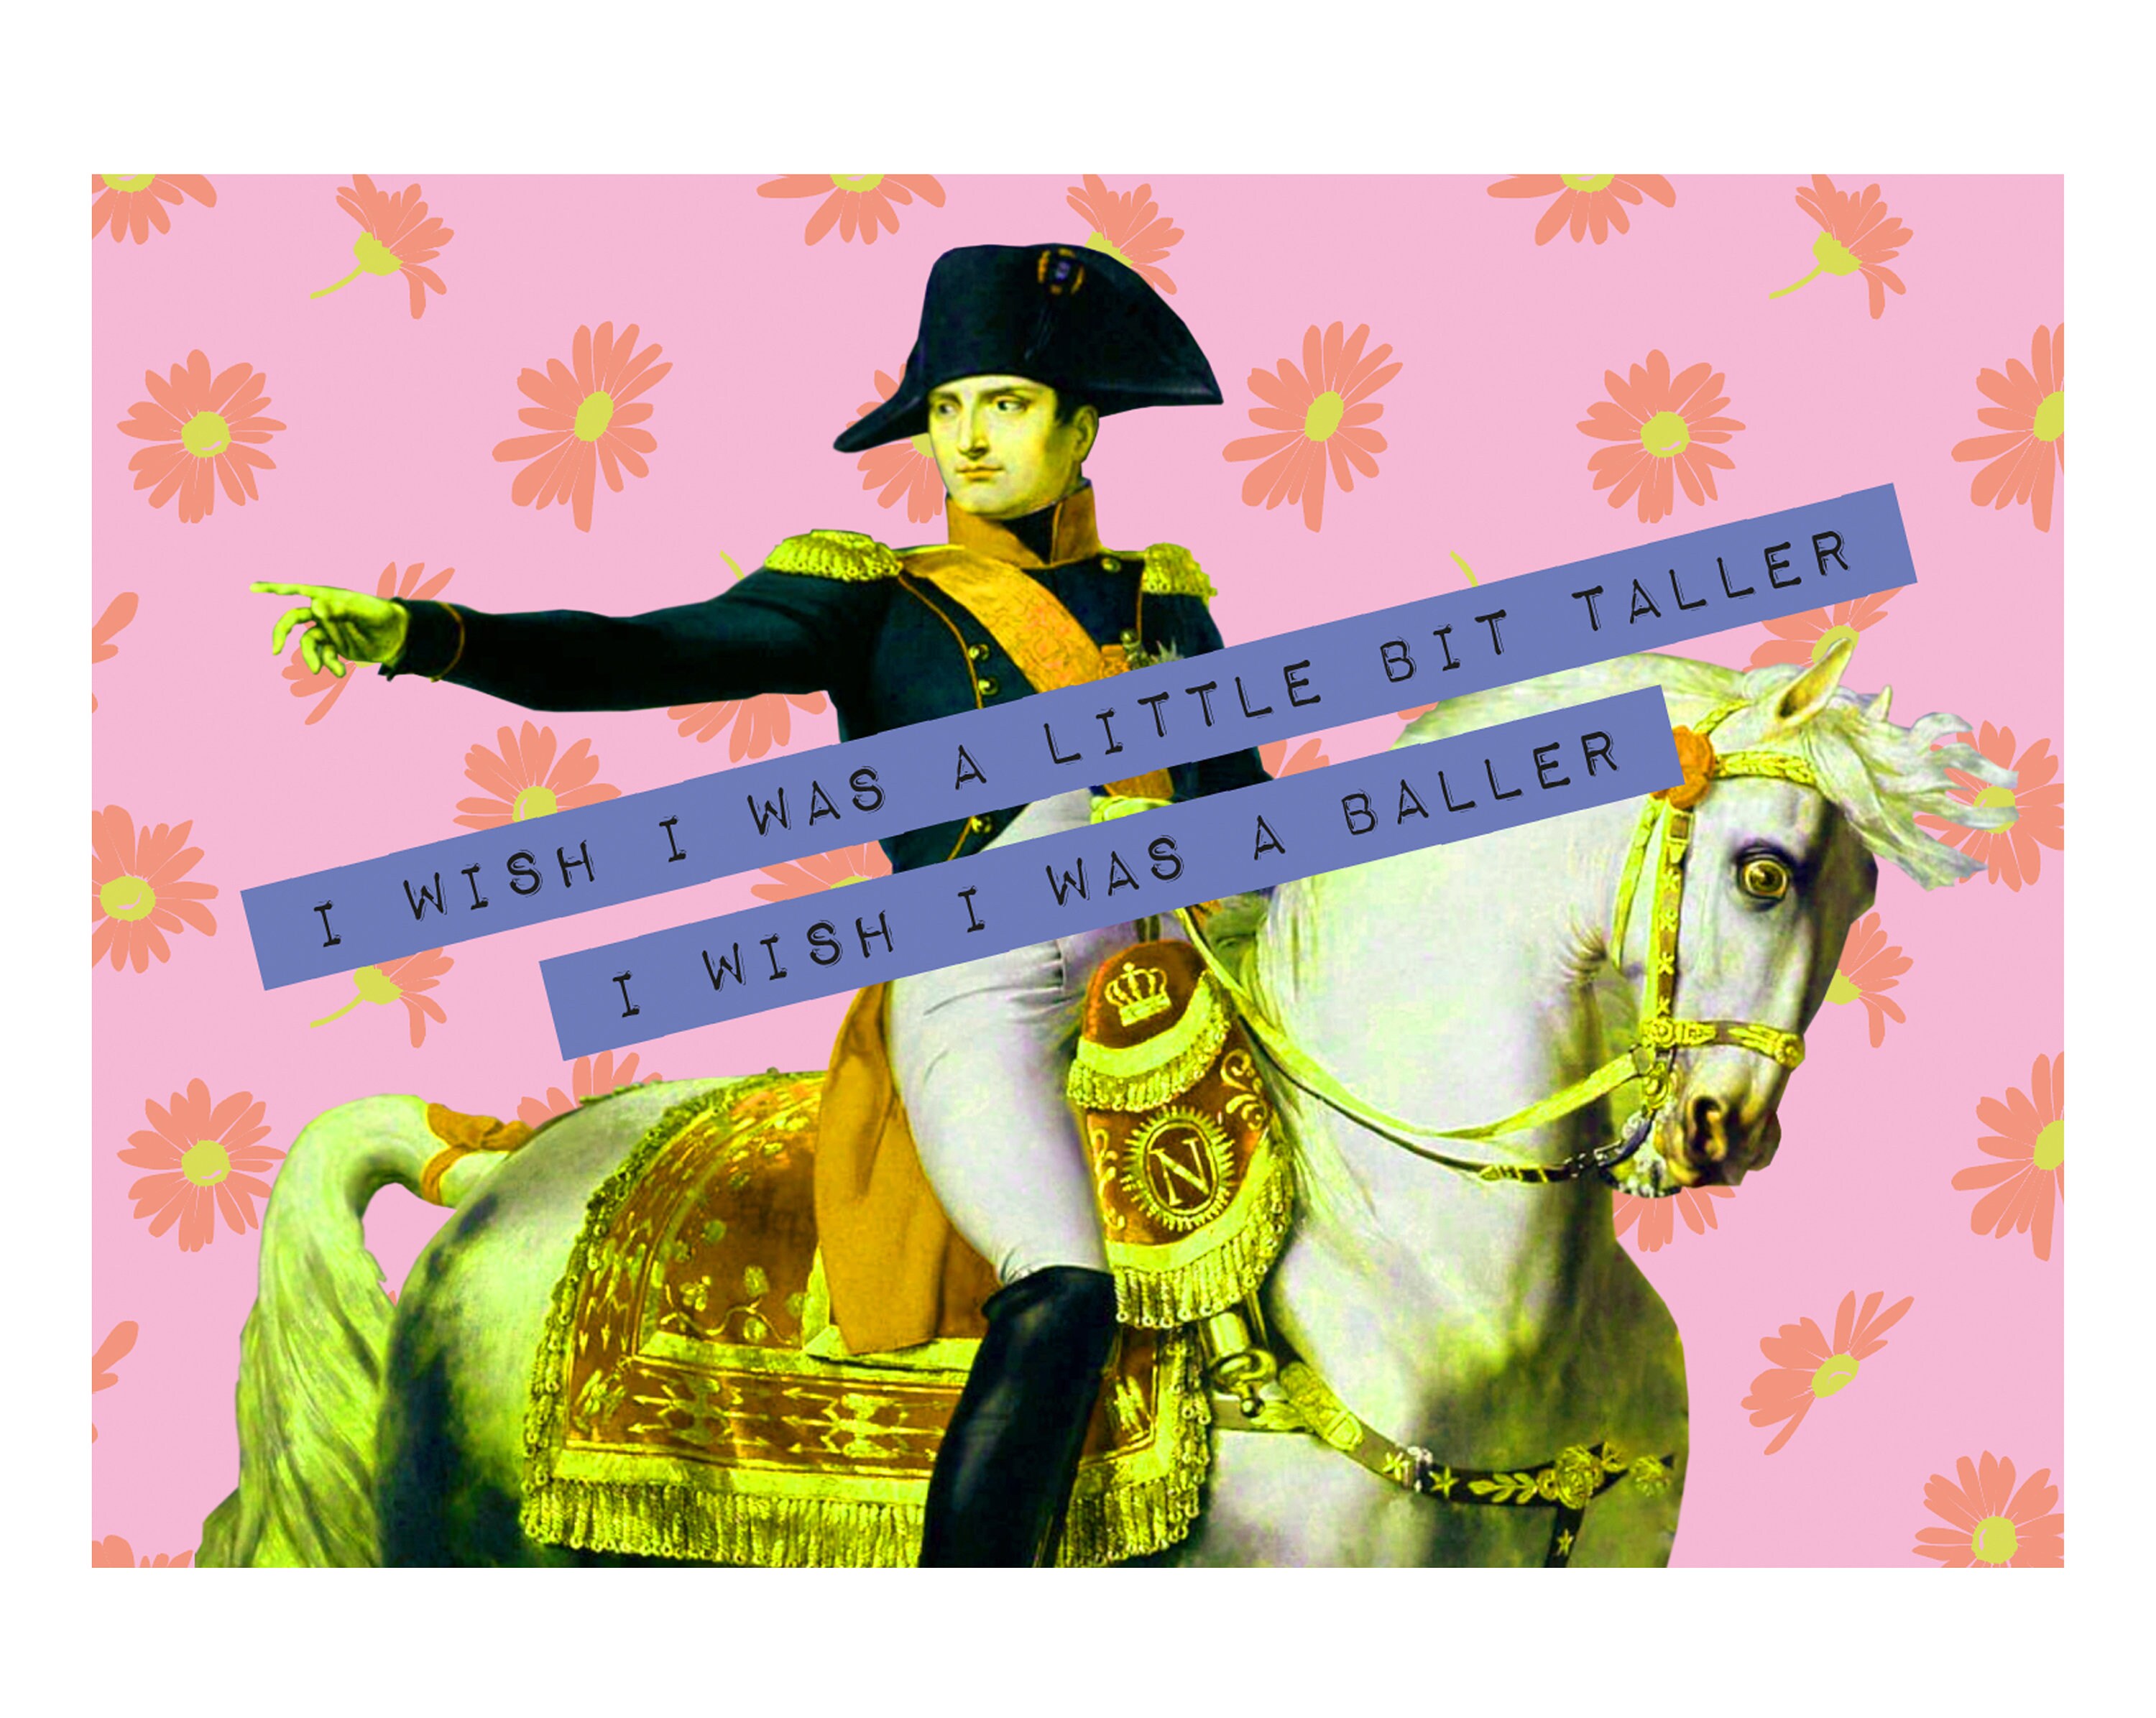 I Wish I Was a Little Bit Taller Skee-lo Napoleon Bonaparte - Etsy